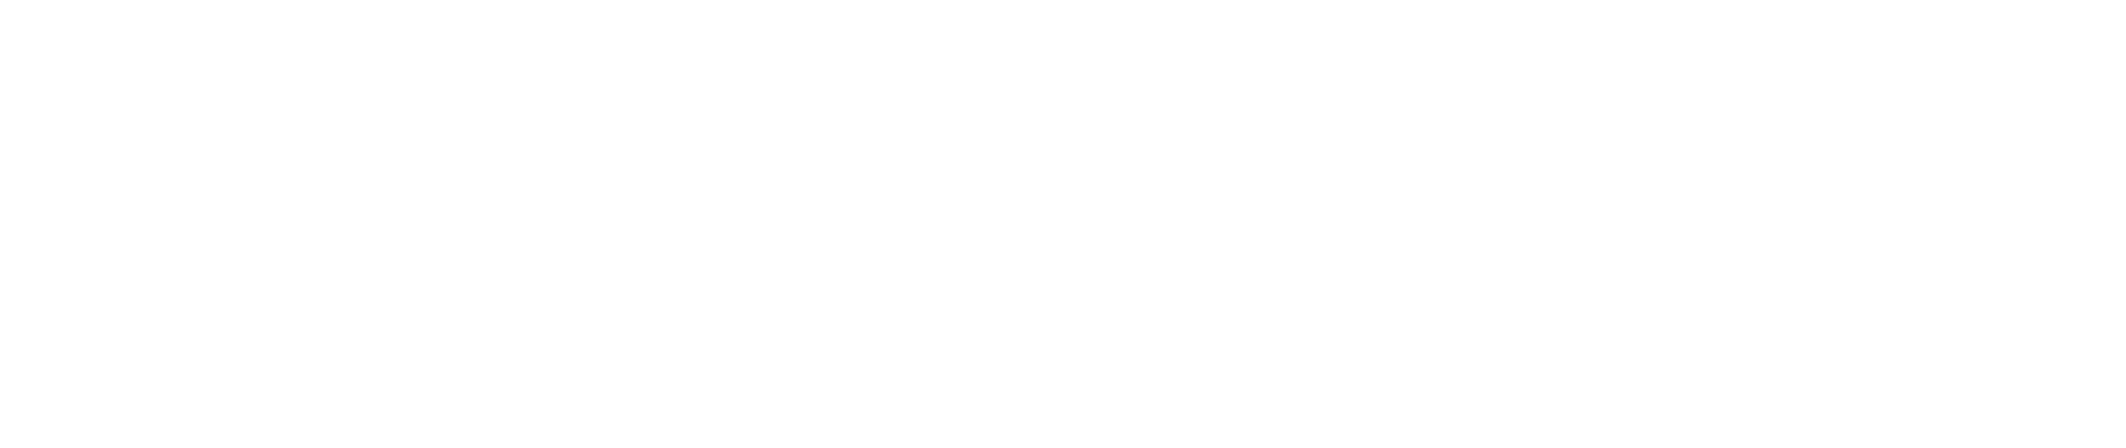 Maeva Oriol - Photographe